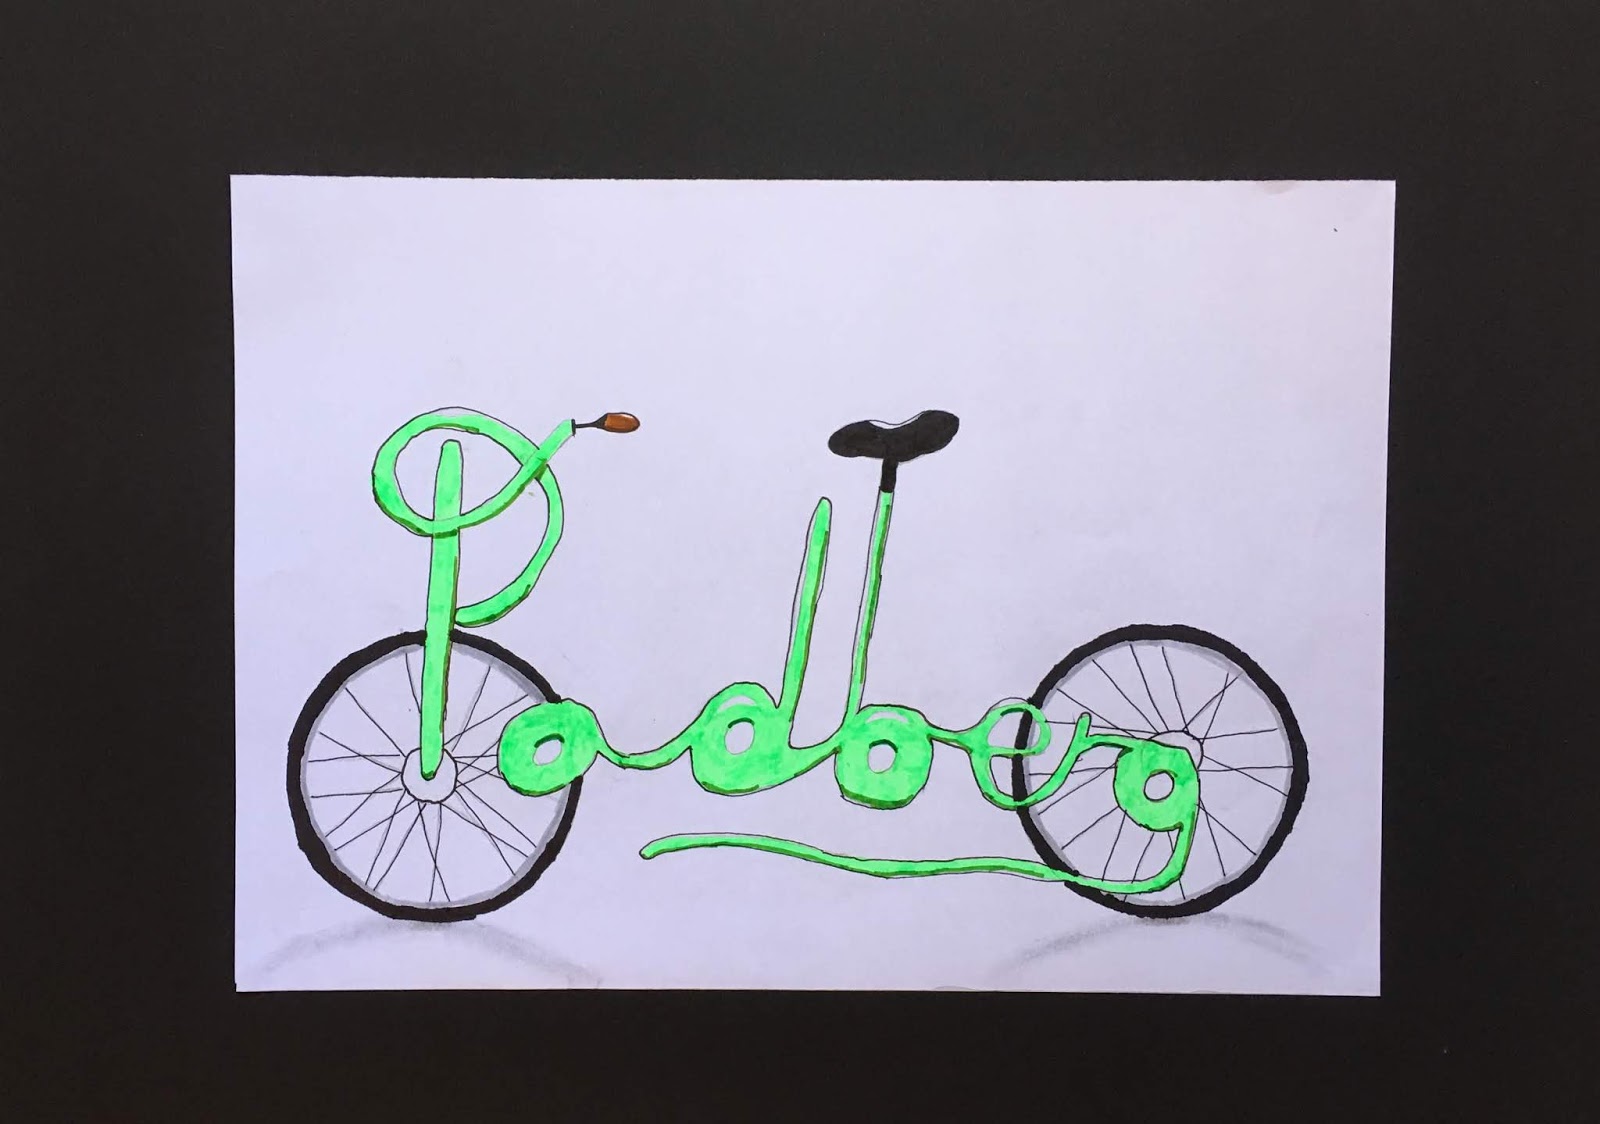 Focus On Paris Graffiti And Bicycle